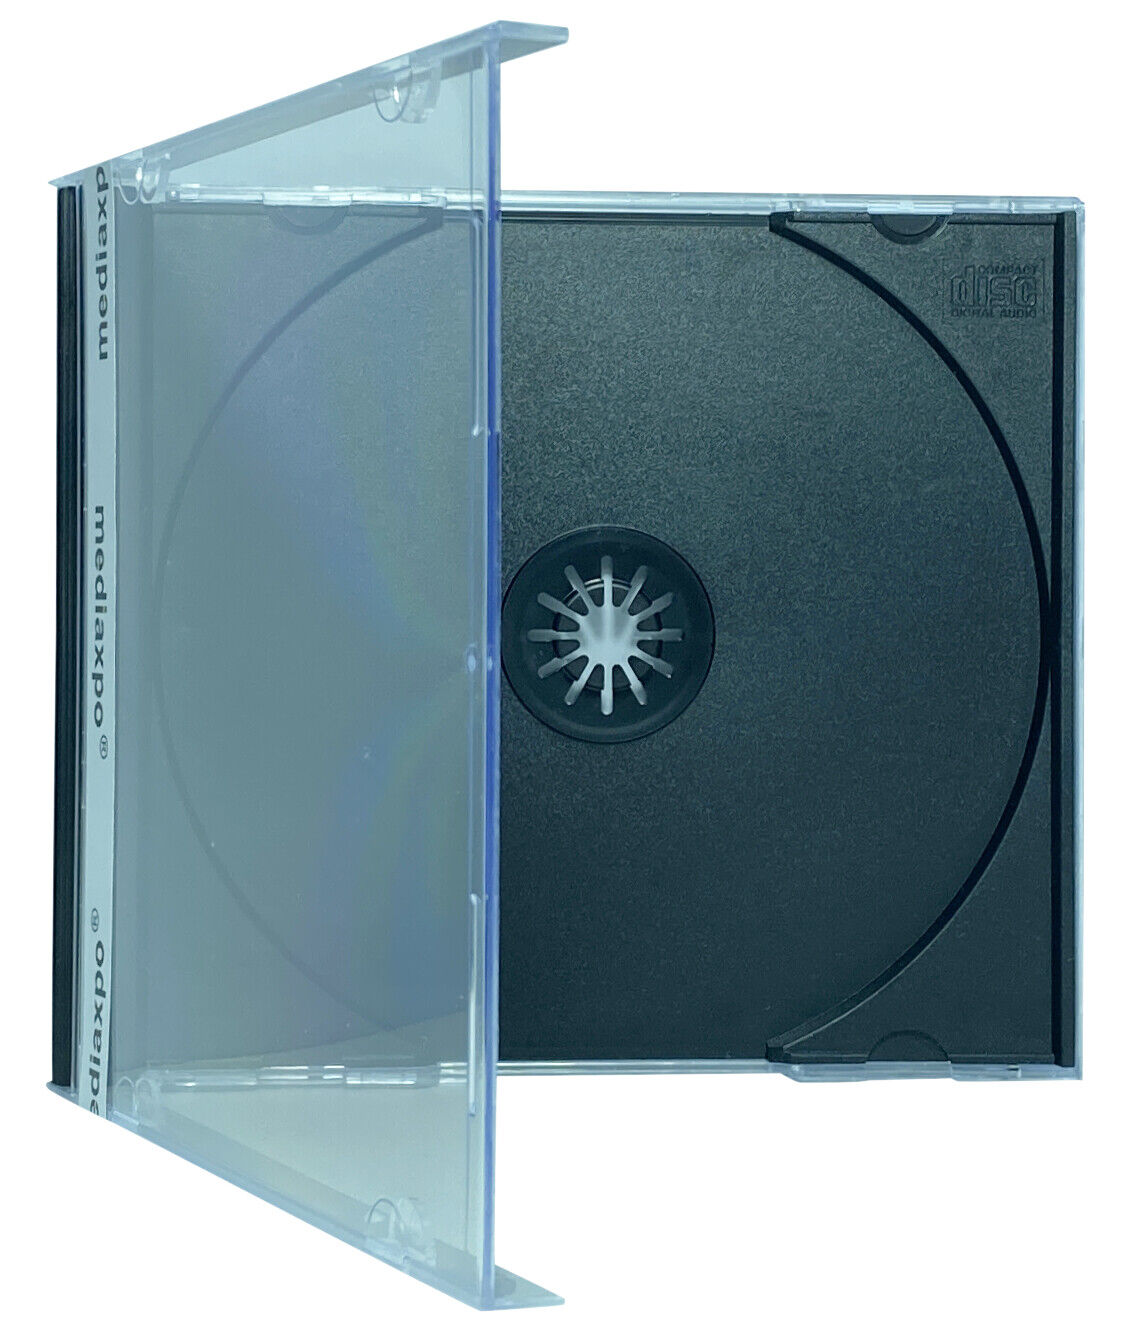 STANDARD Black CD Jewel Case Lot